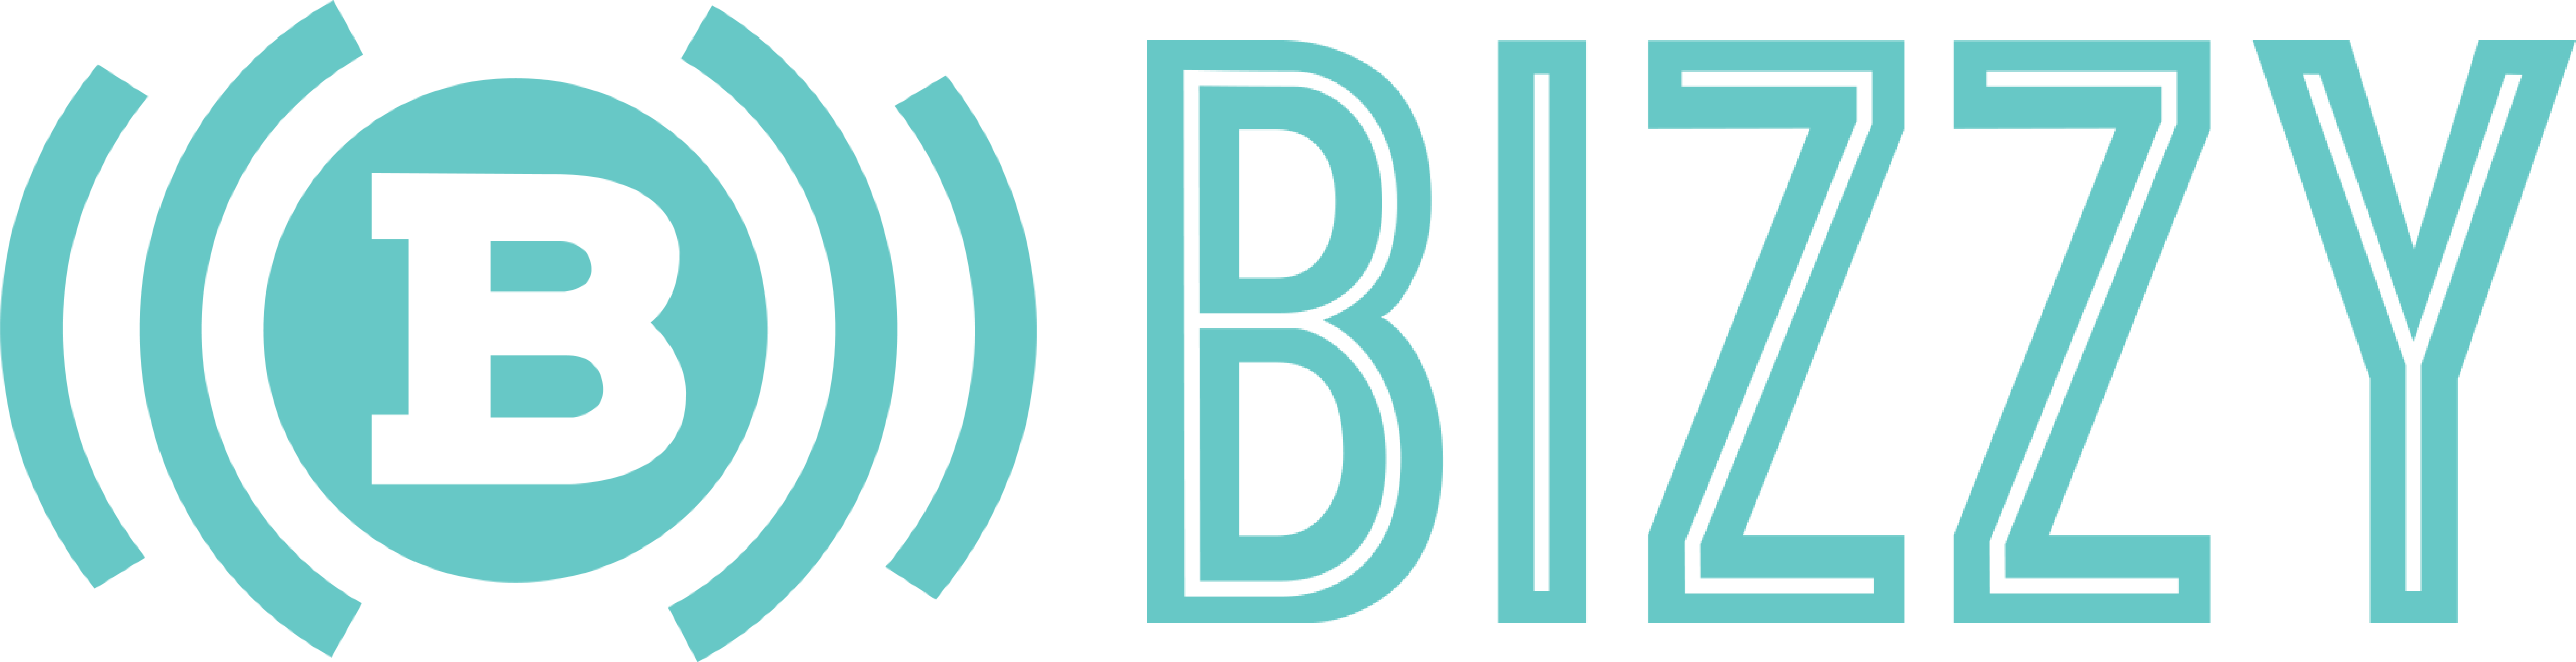 Bizzy Coffee Logo Design PNG